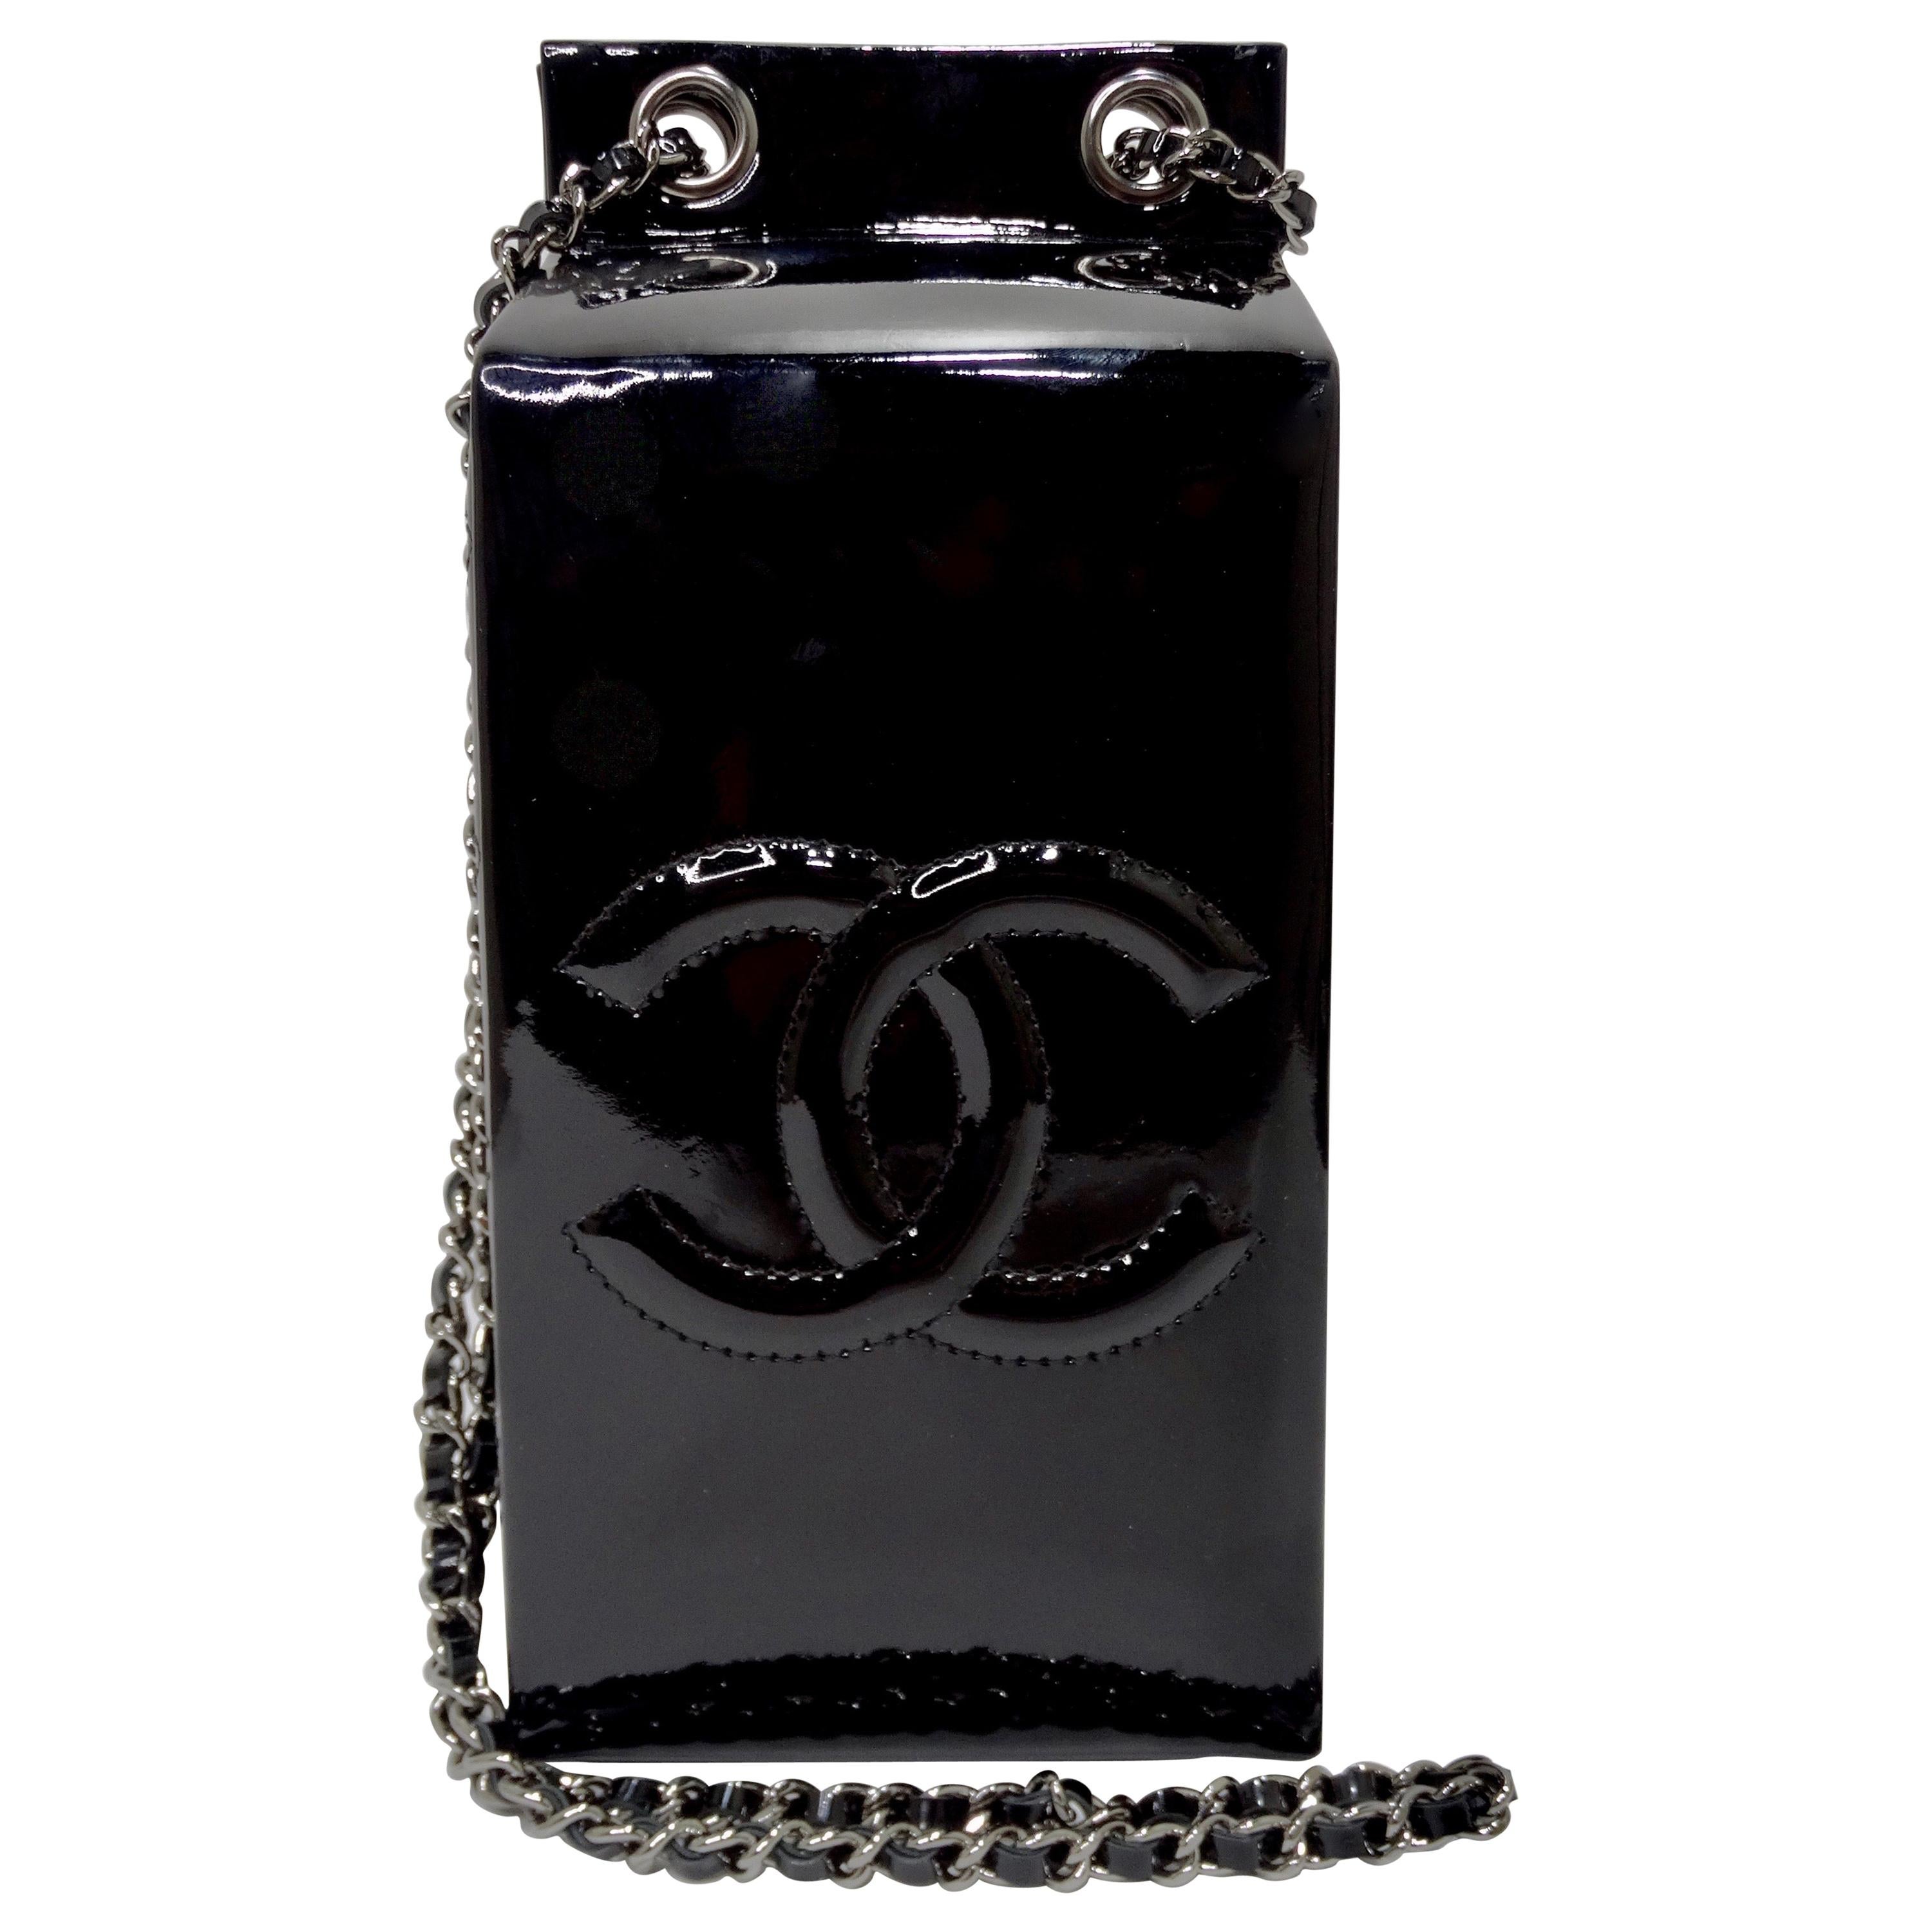 Chanel 2015 Black Patent Leather Milk Carton Bag